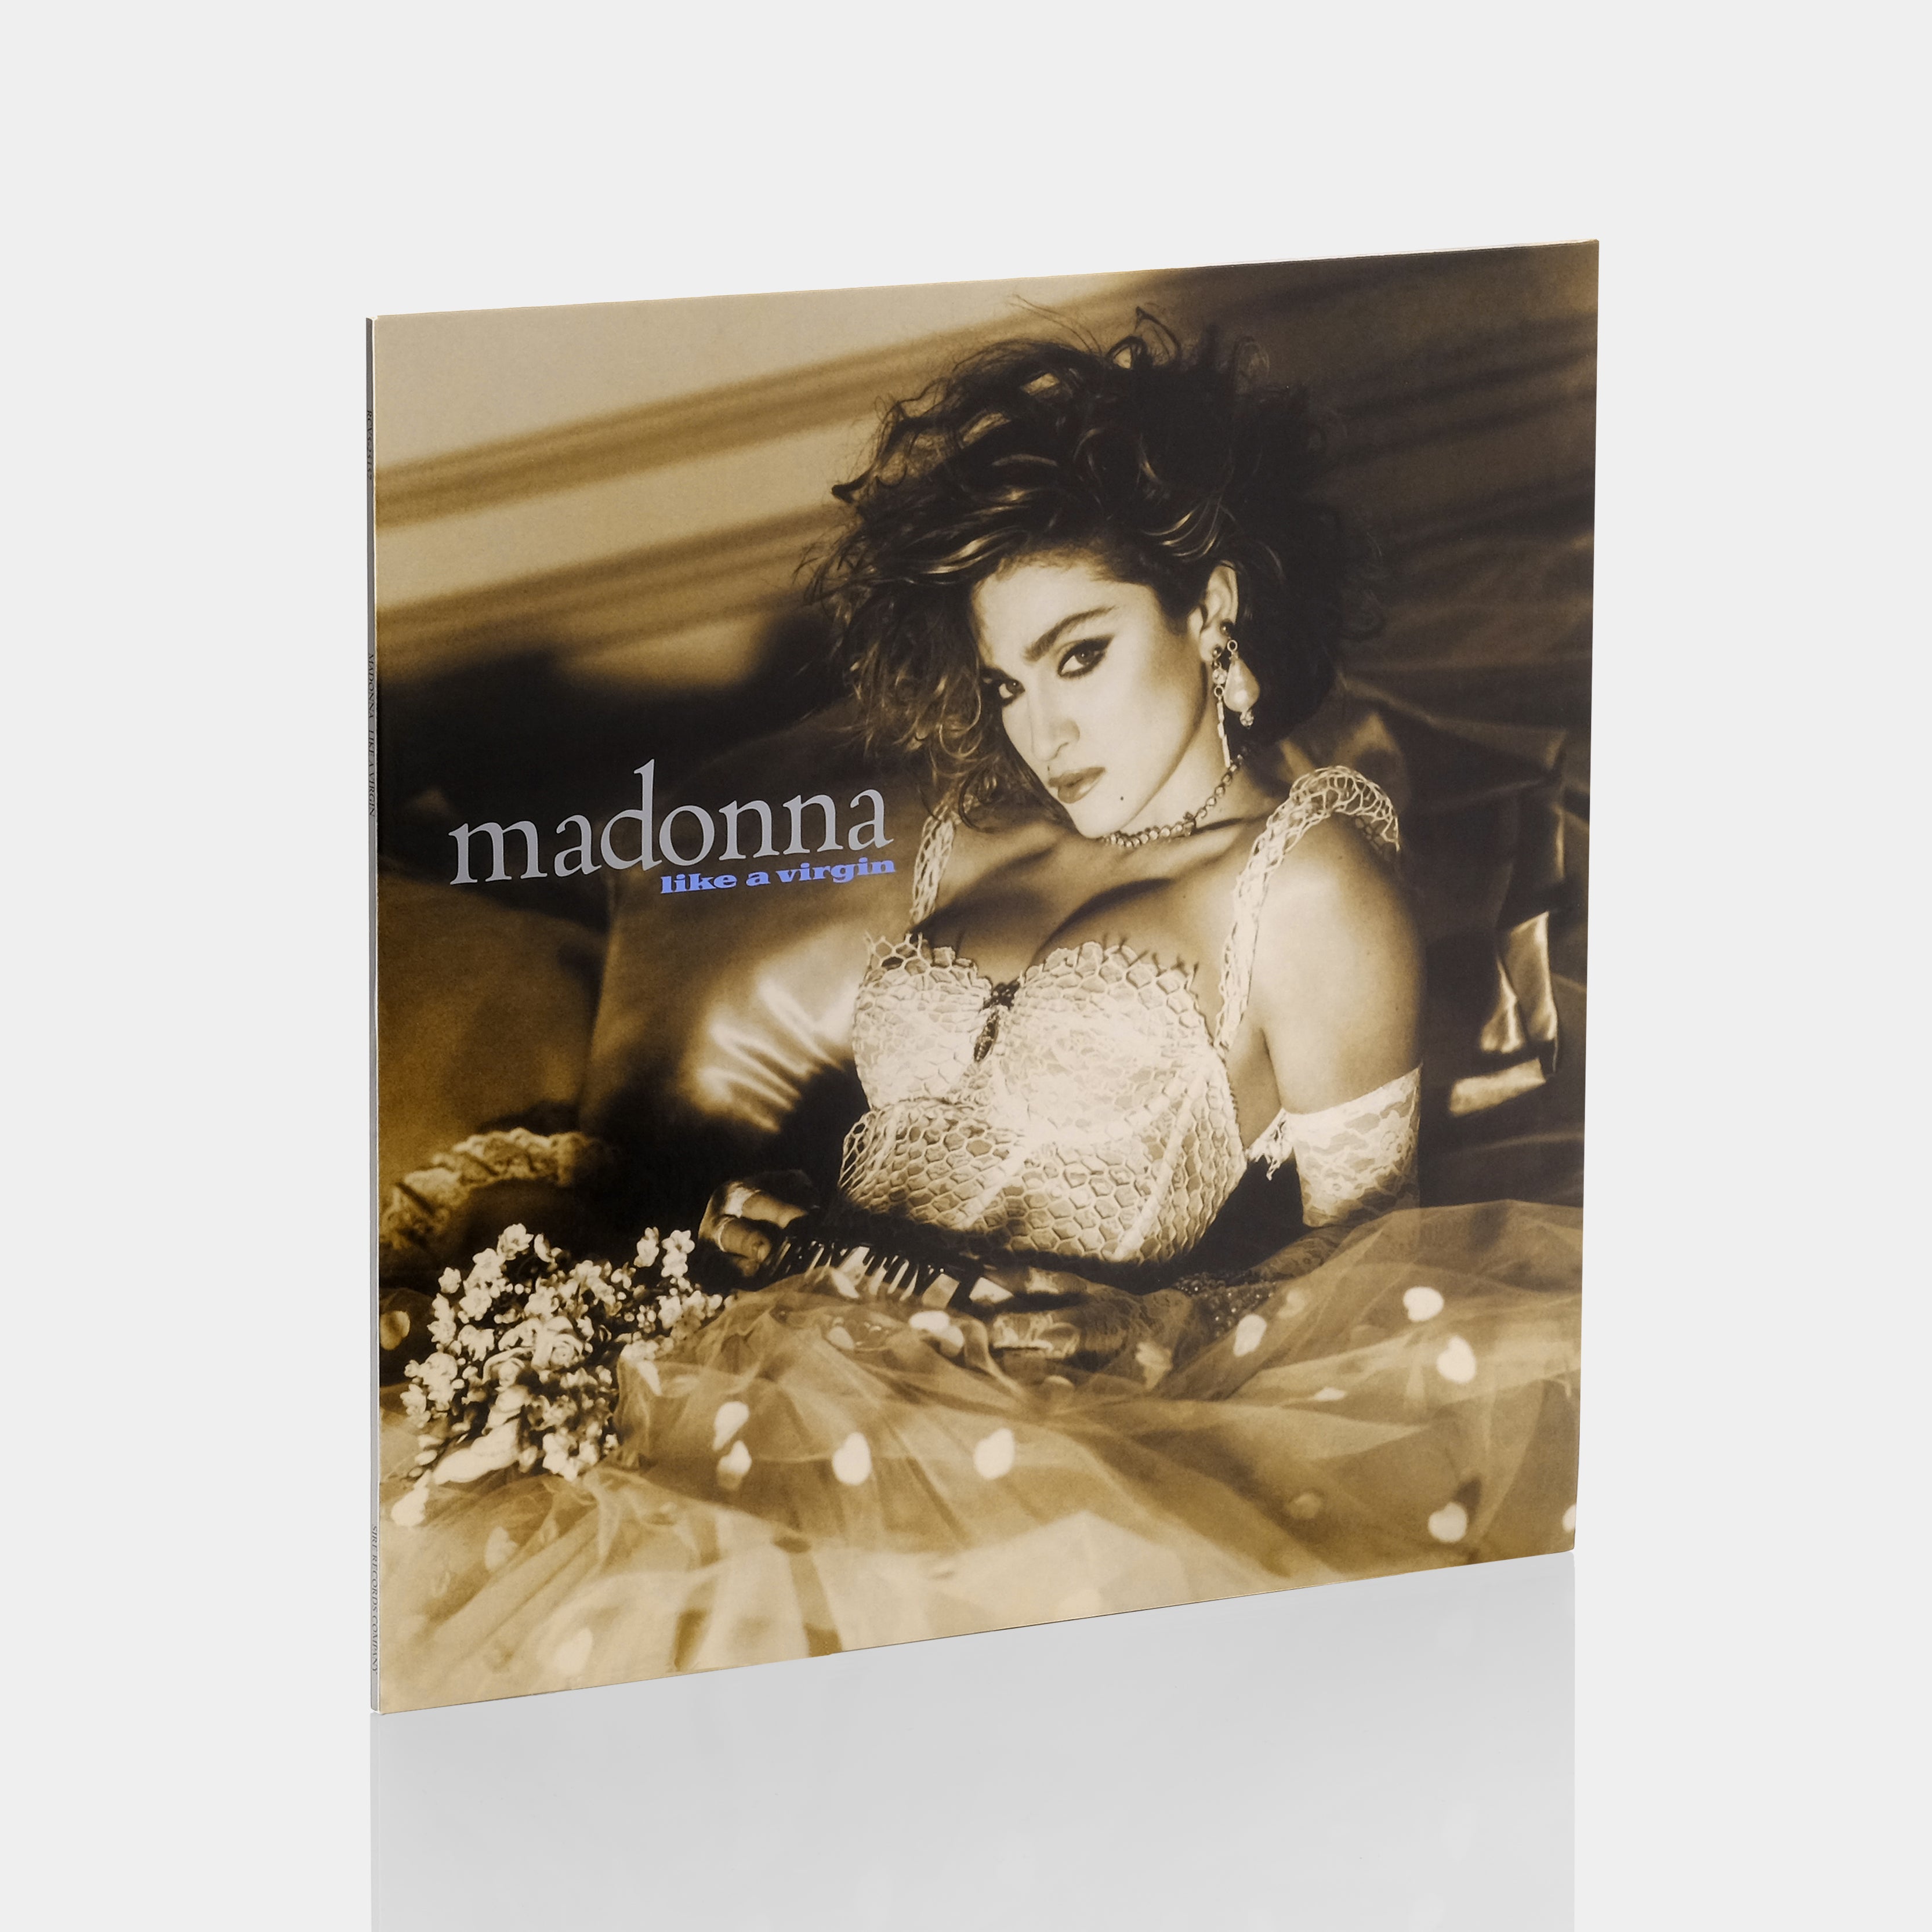 Madonna - Like A Virgin LP Crystal Clear Vinyl Record